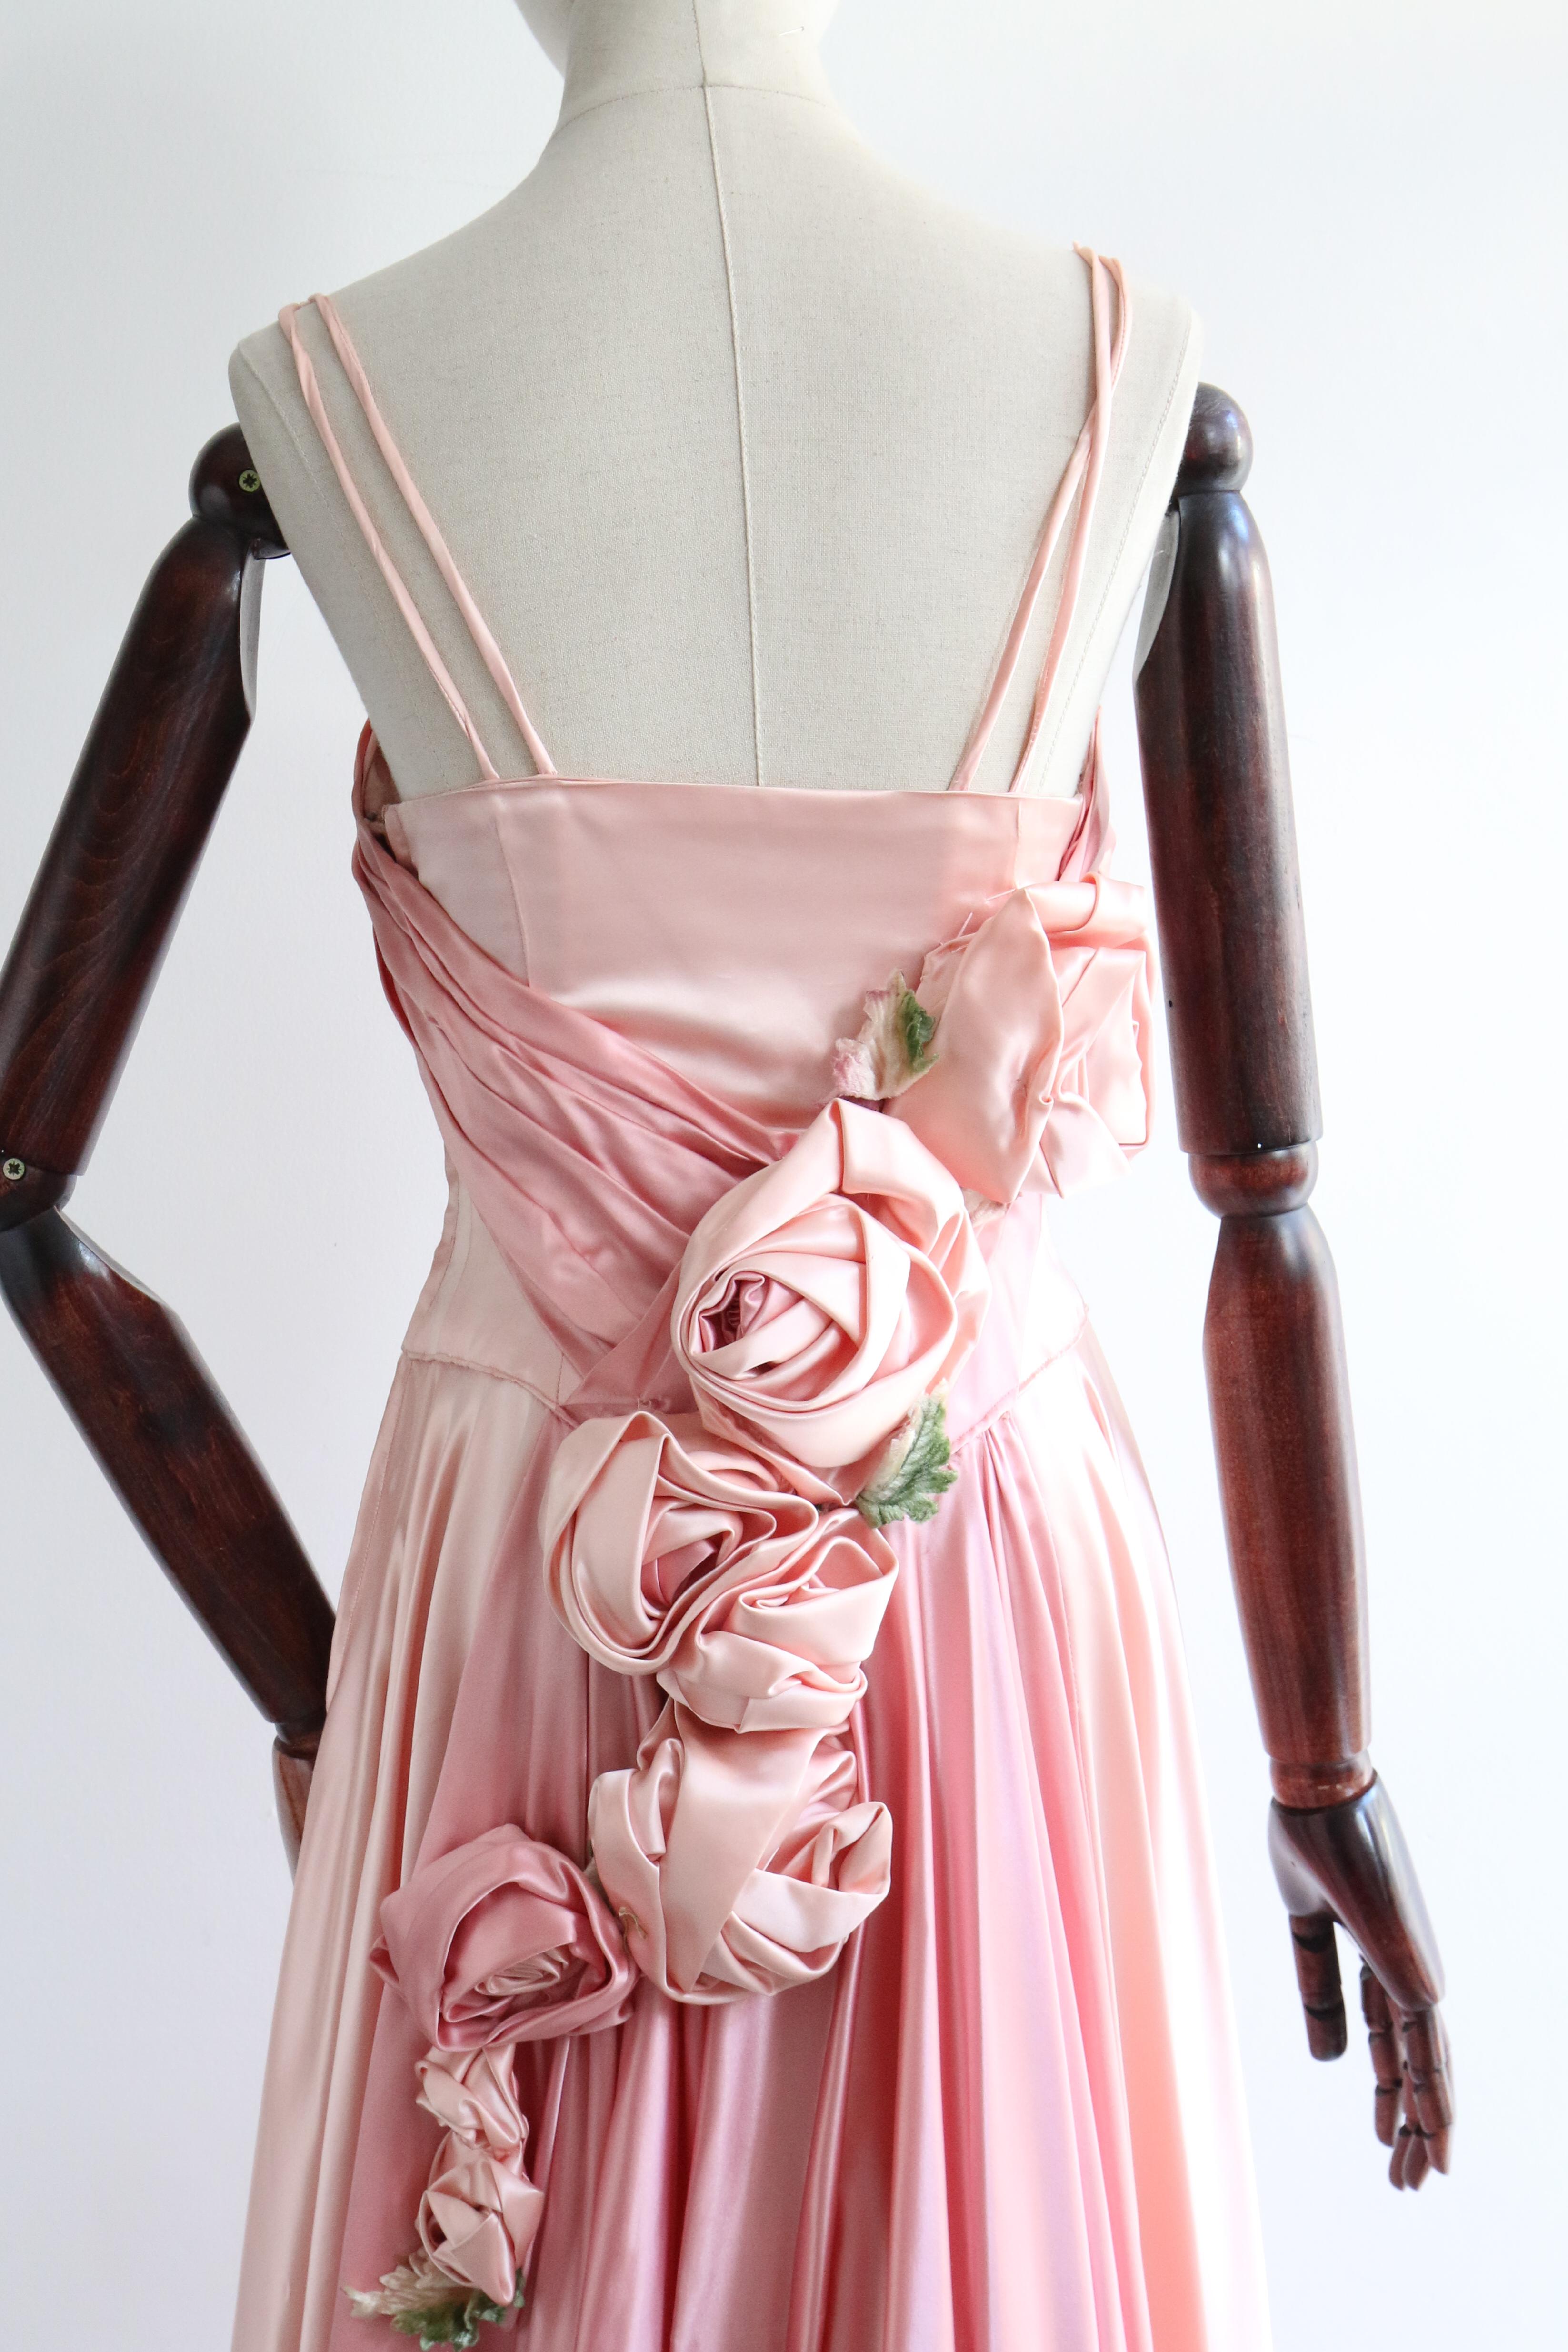 Vintage 1950's Duchess Satin Rose Embellished Dress UK 10 US 6 2